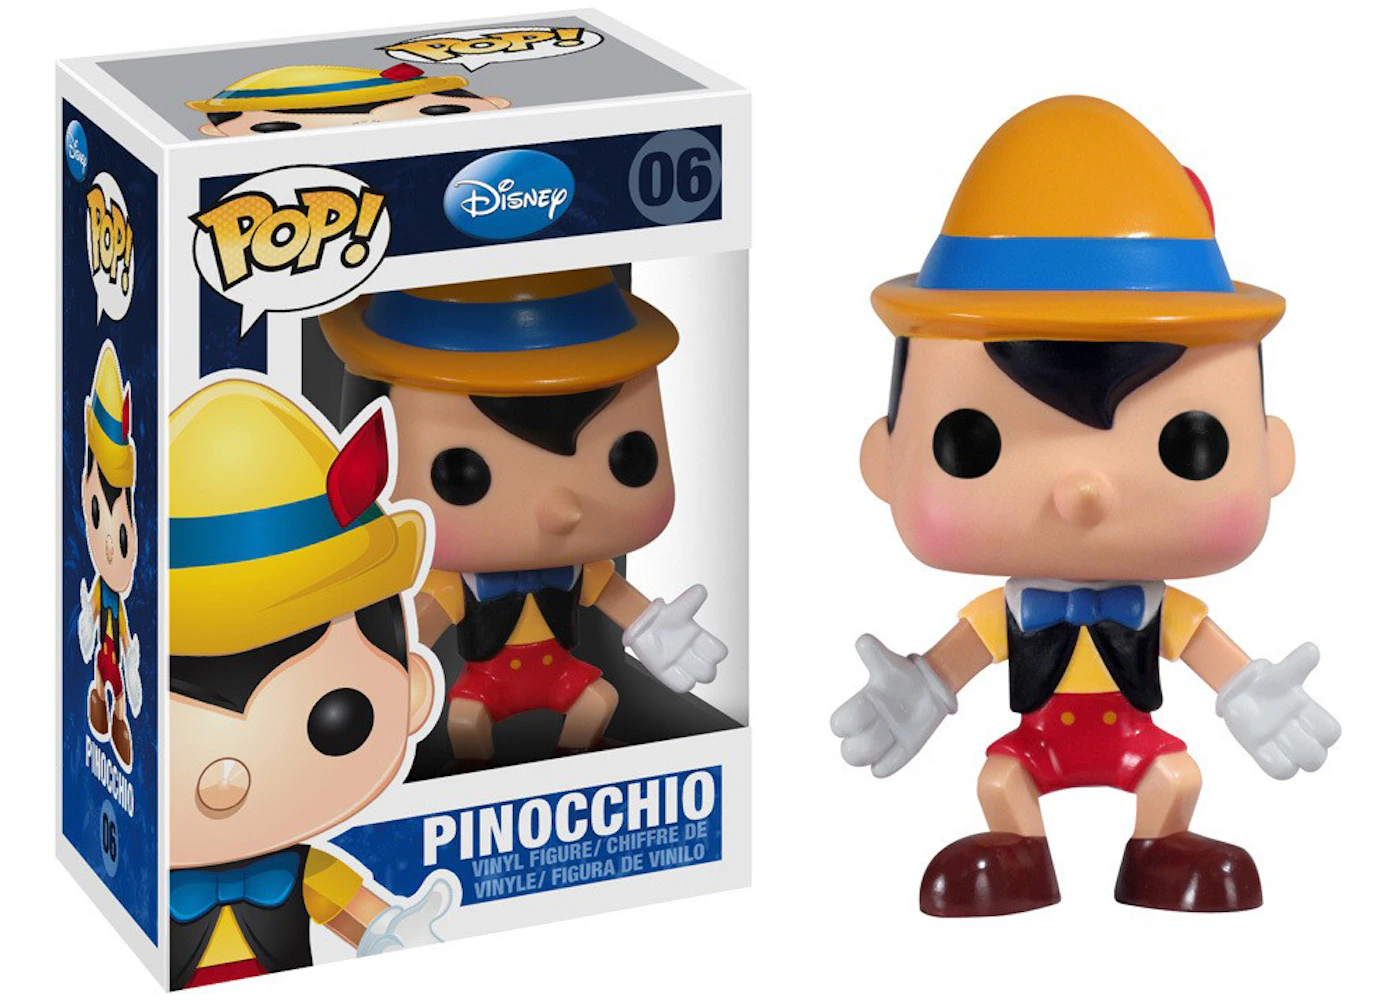 Funko Pop! Disney Pinocchio Figure #06 - US